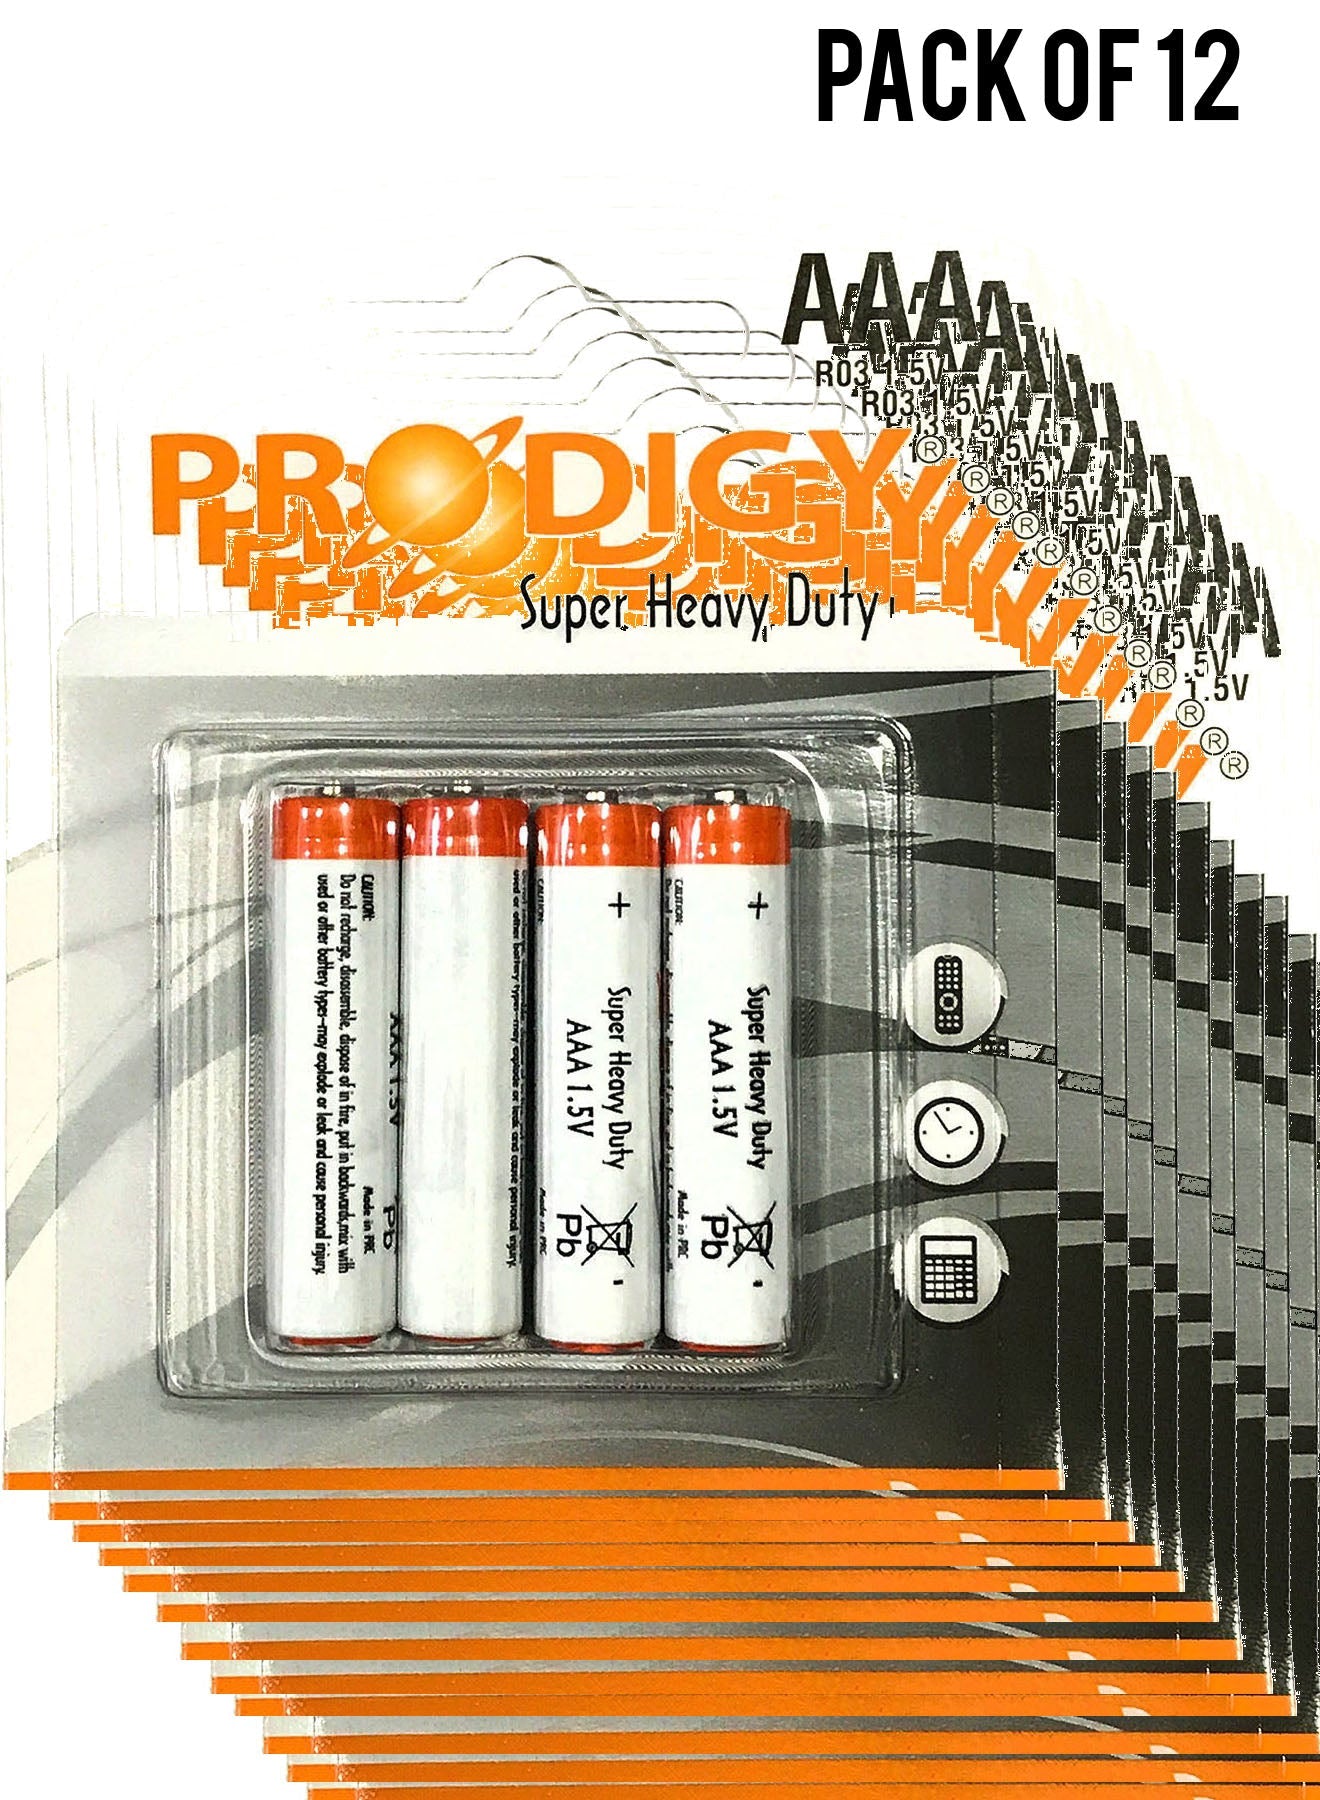 Prodigy Super Heavy Duty R03PVC 15V AAA4 Value Pack of 12 